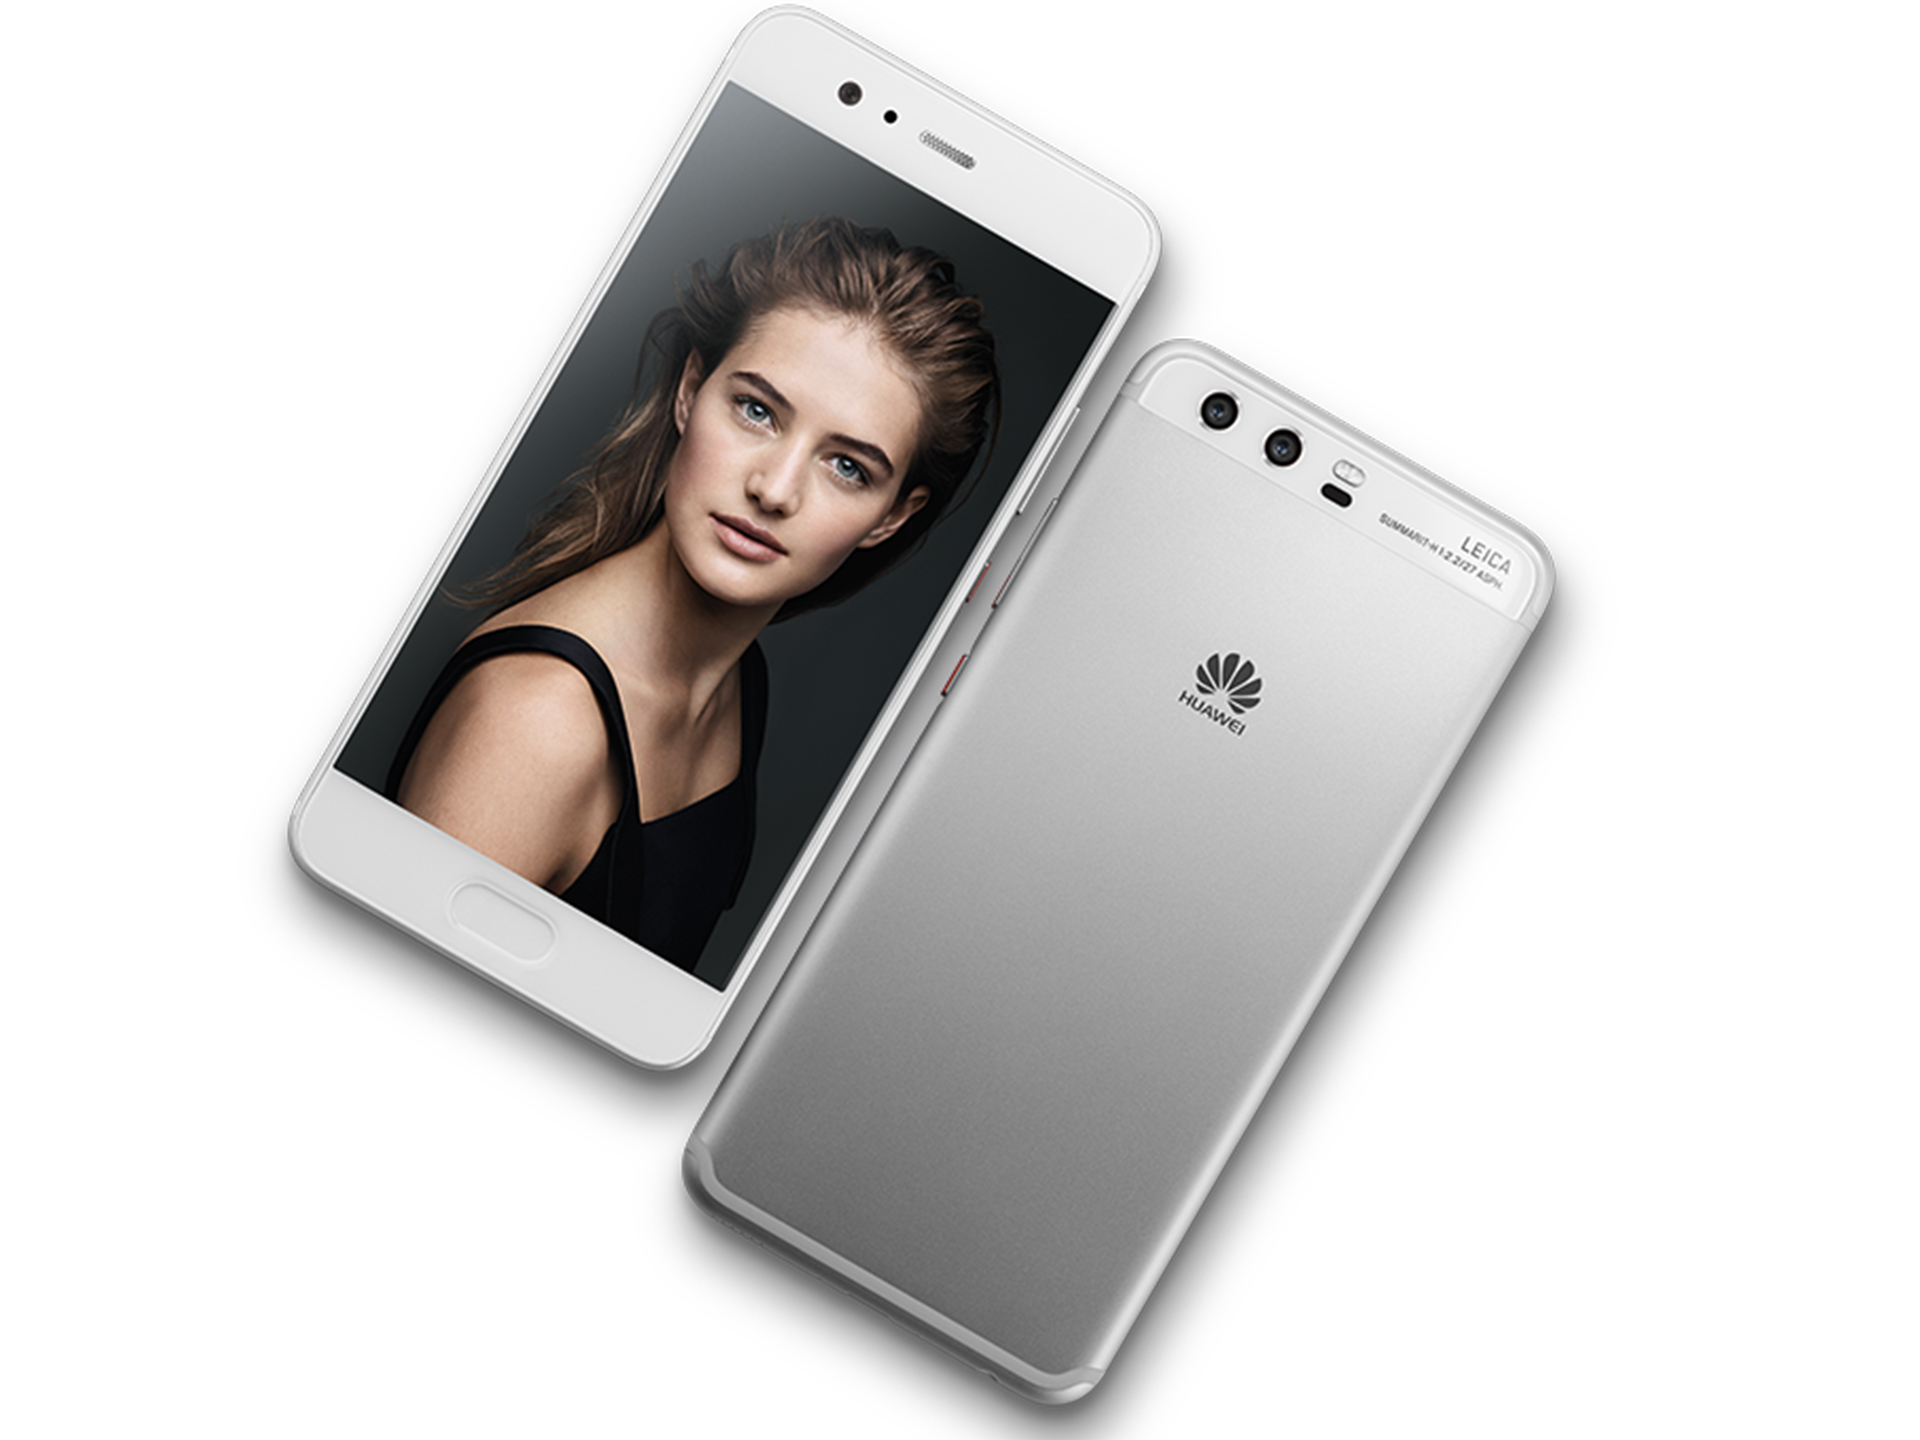 Huawei P10 Smartphone - Reviews